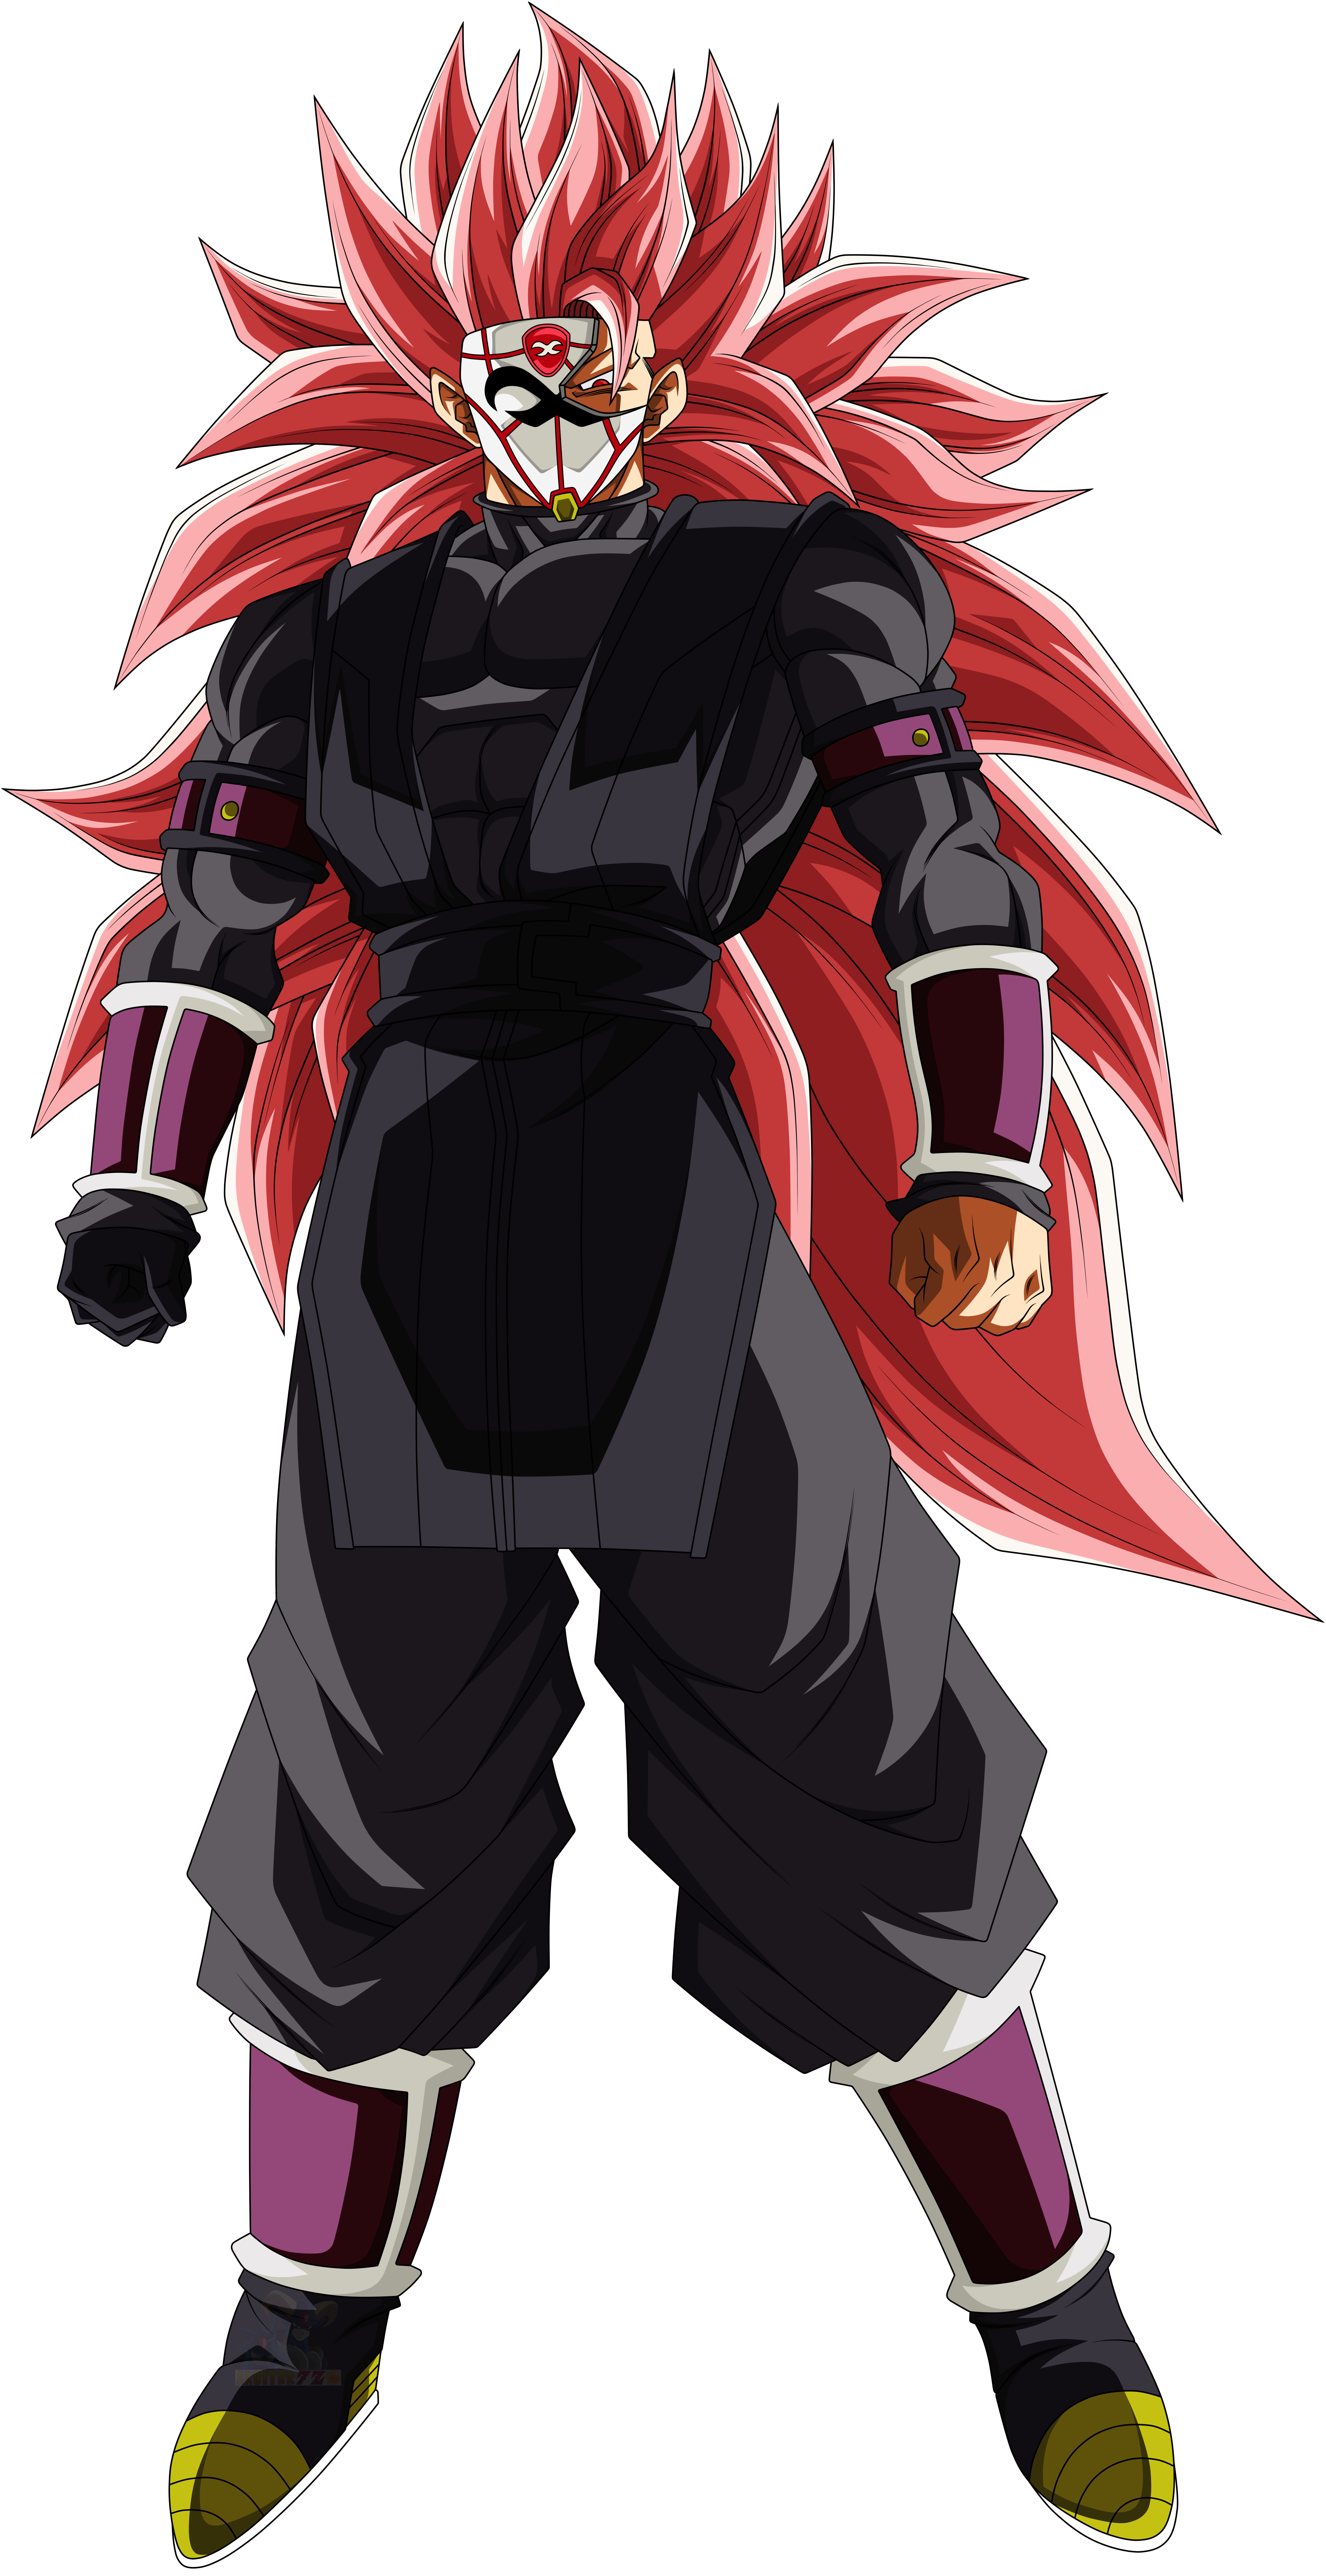 RedHairedGuy 😎 on X: Super Saiyan 3 Rose Time Breaker Goku Black #Goku  #GOKUBLACK #DragonBallSuper #SuperDragonBallHeroes   / X